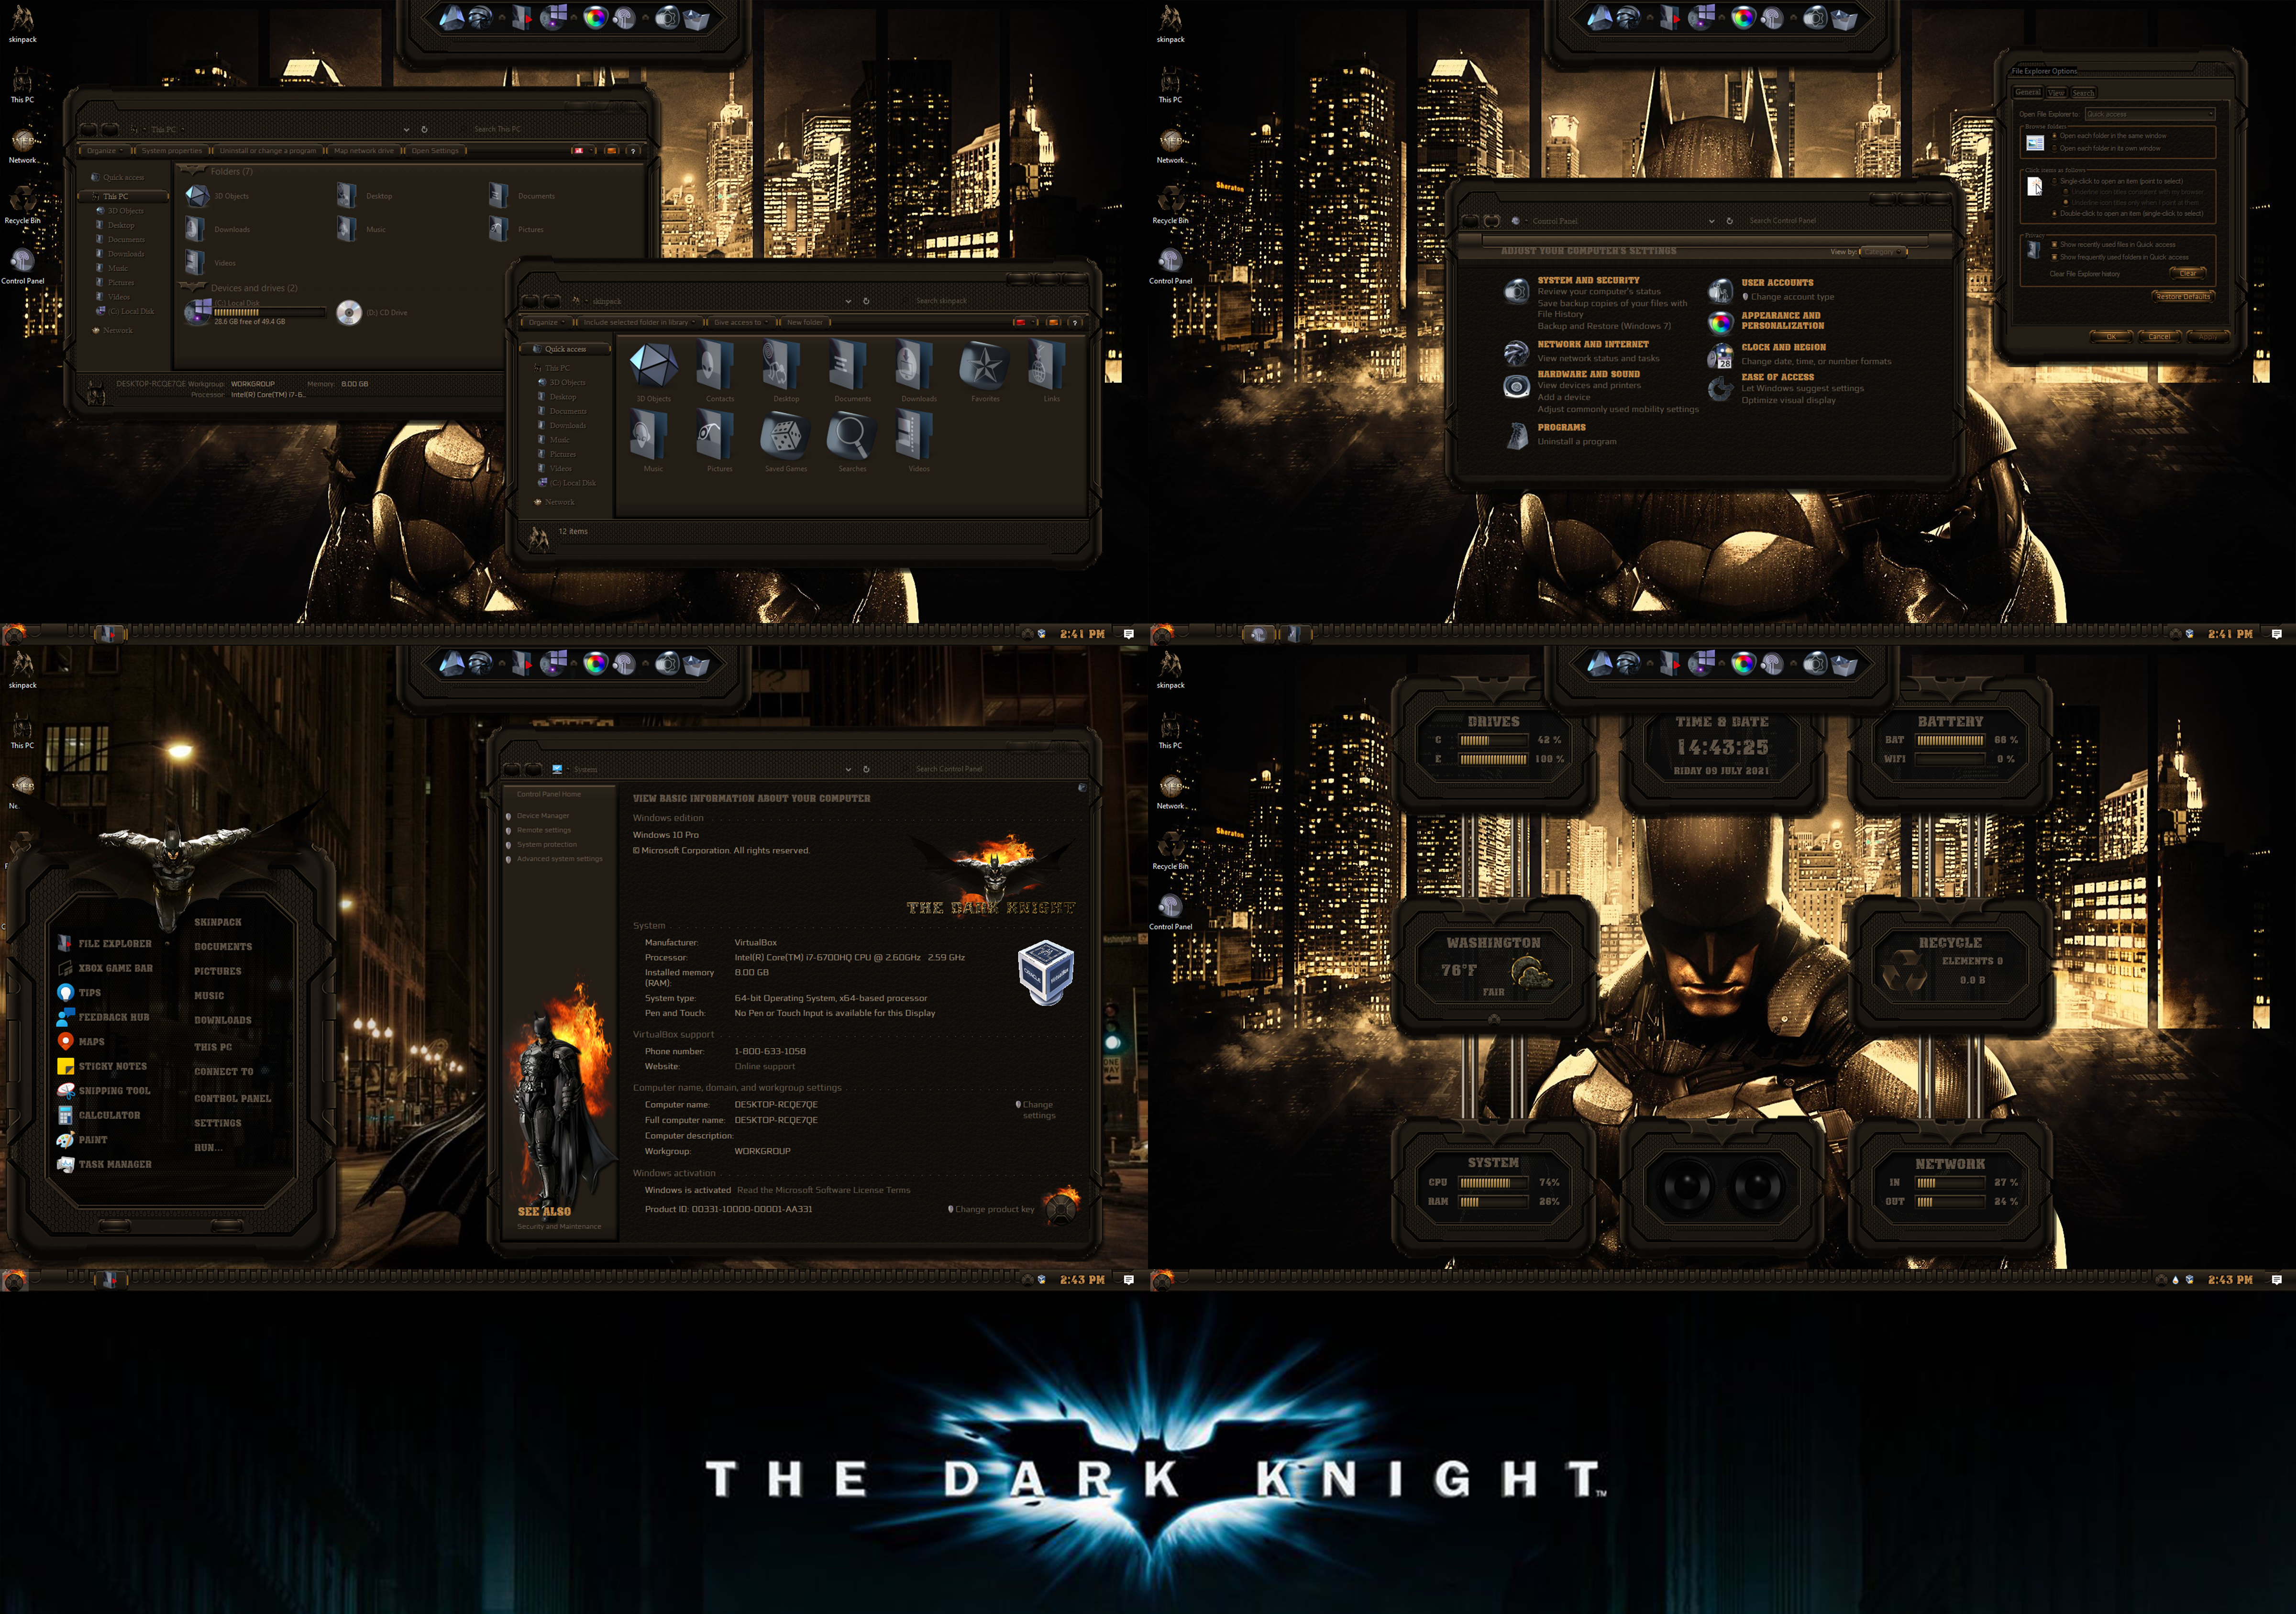 BATMAN THE DARK KNIGHT Permium Theme for Windows10 by protheme on DeviantArt